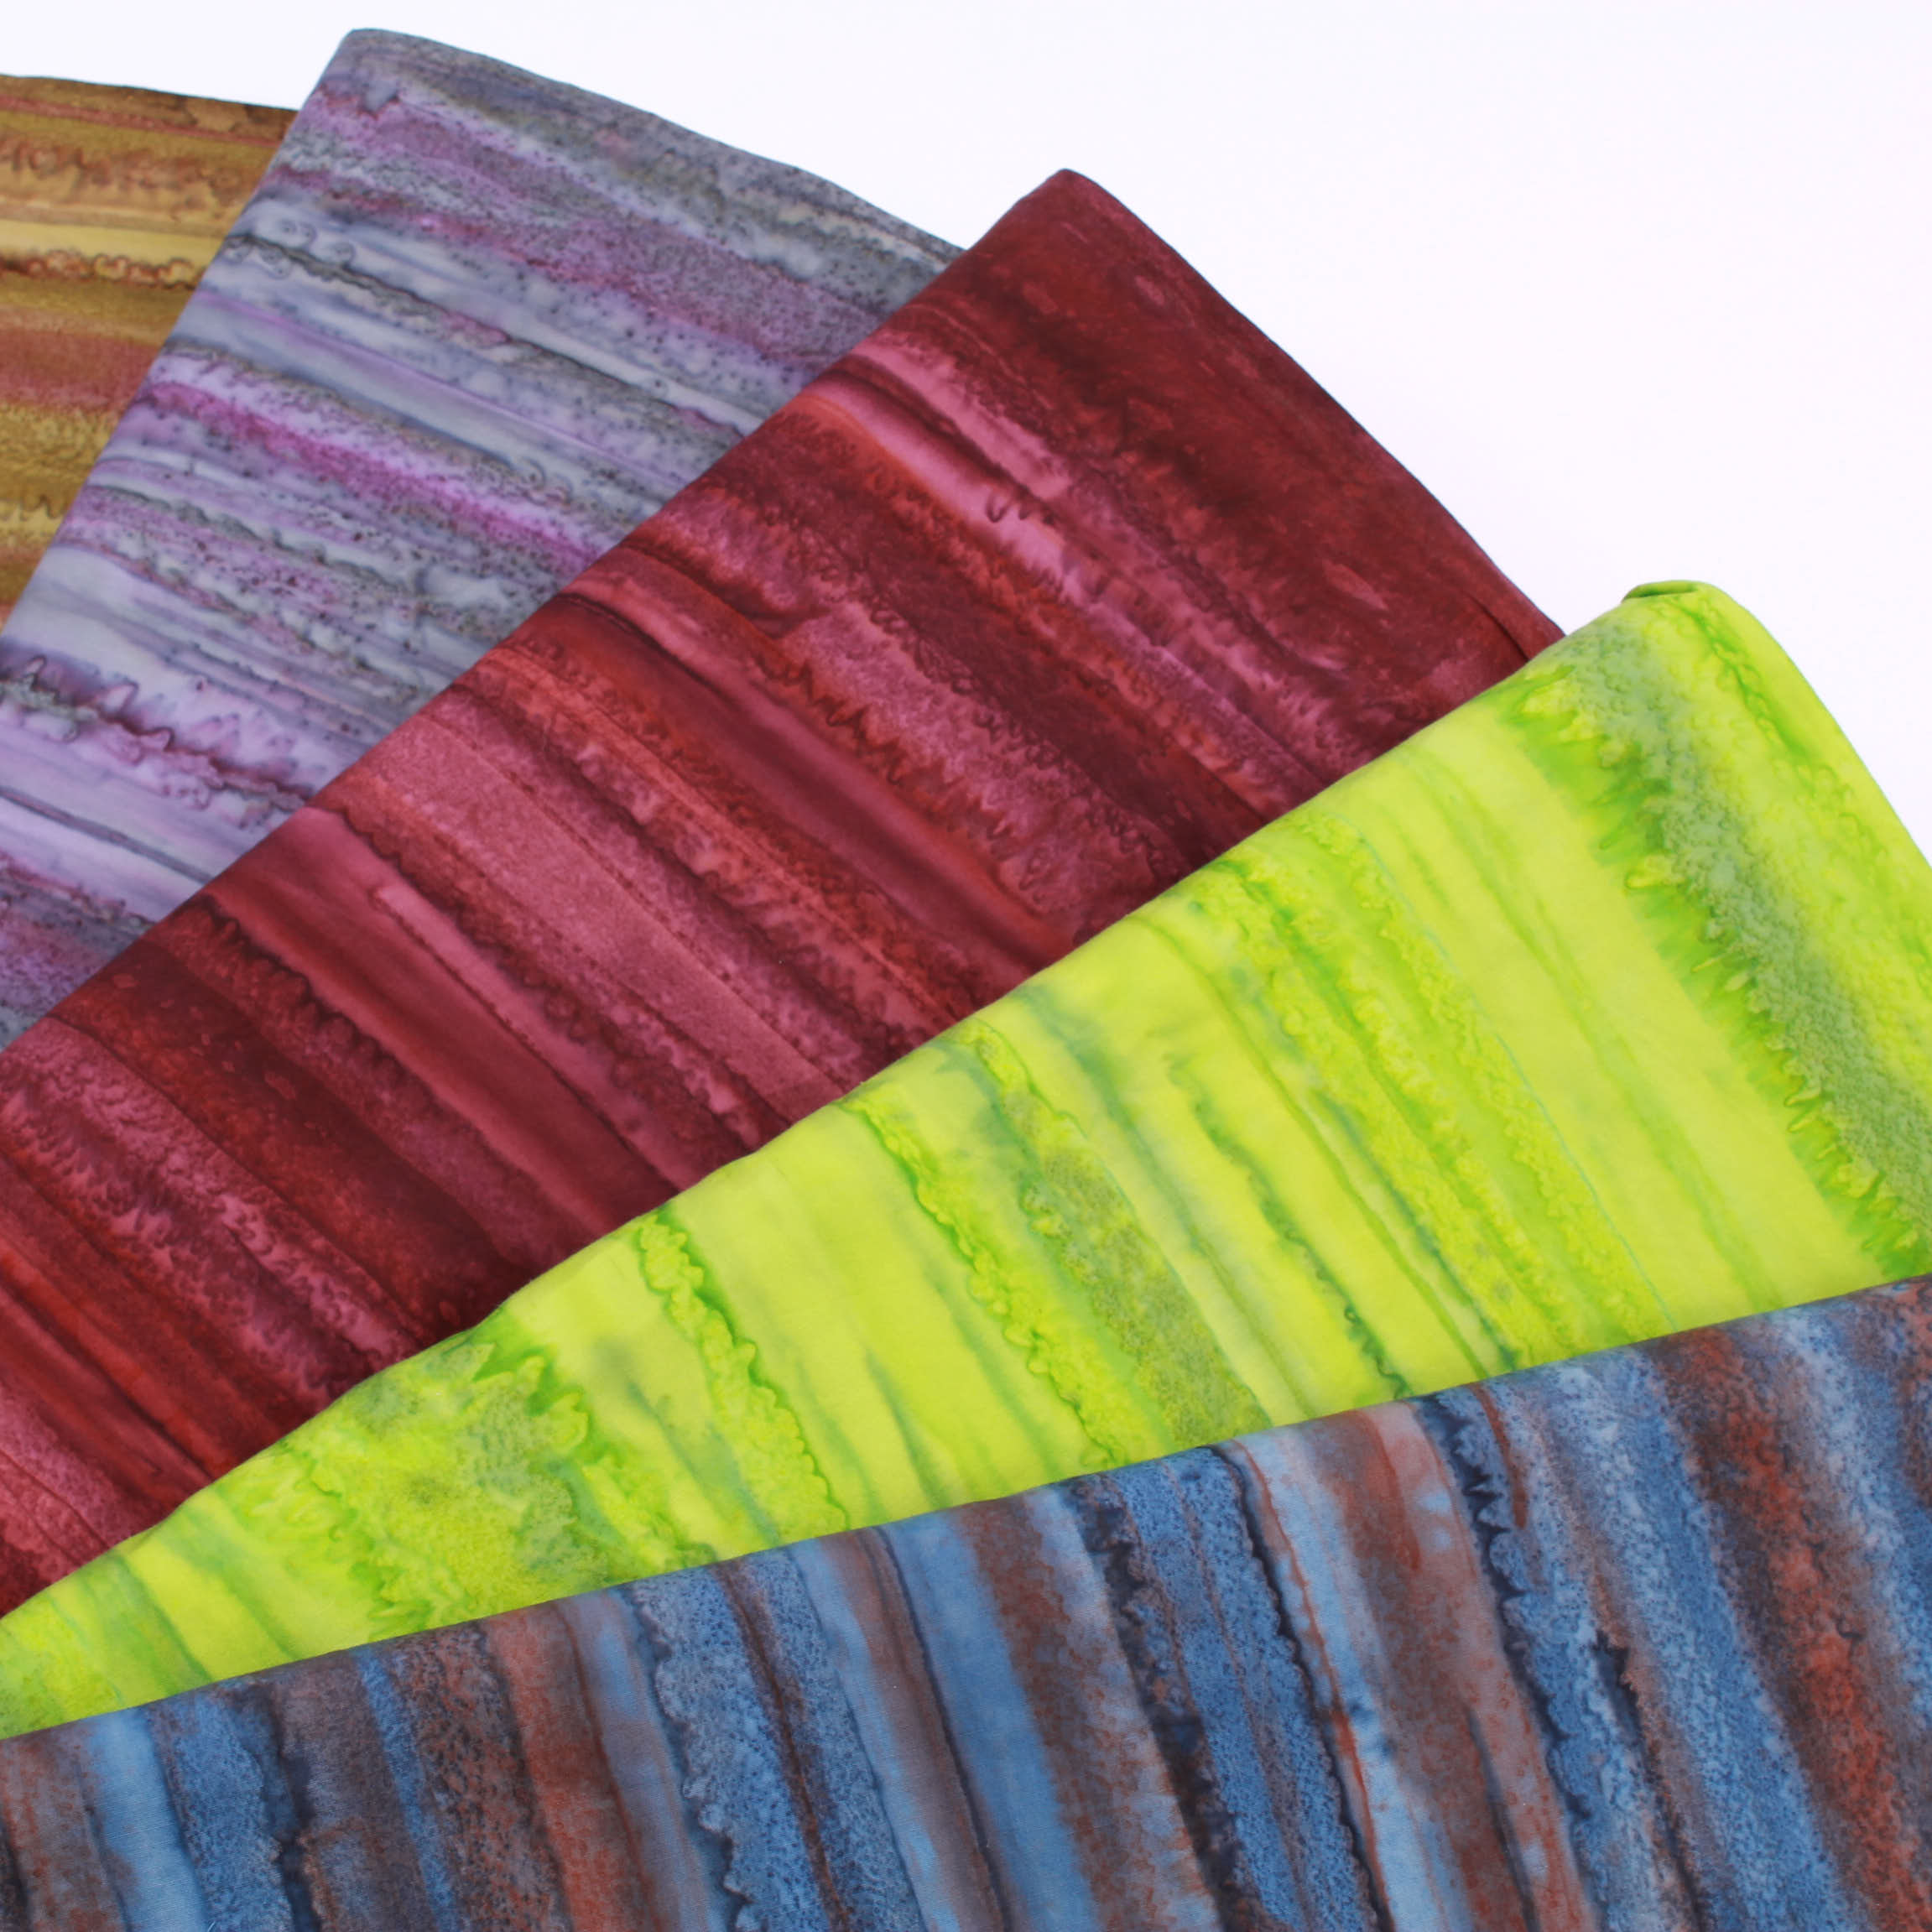 1.5 Yards Zinnia by Island Batik Hand-Dyed 100% Cotton Quilt Batik Fabric  by The Yard 721402018